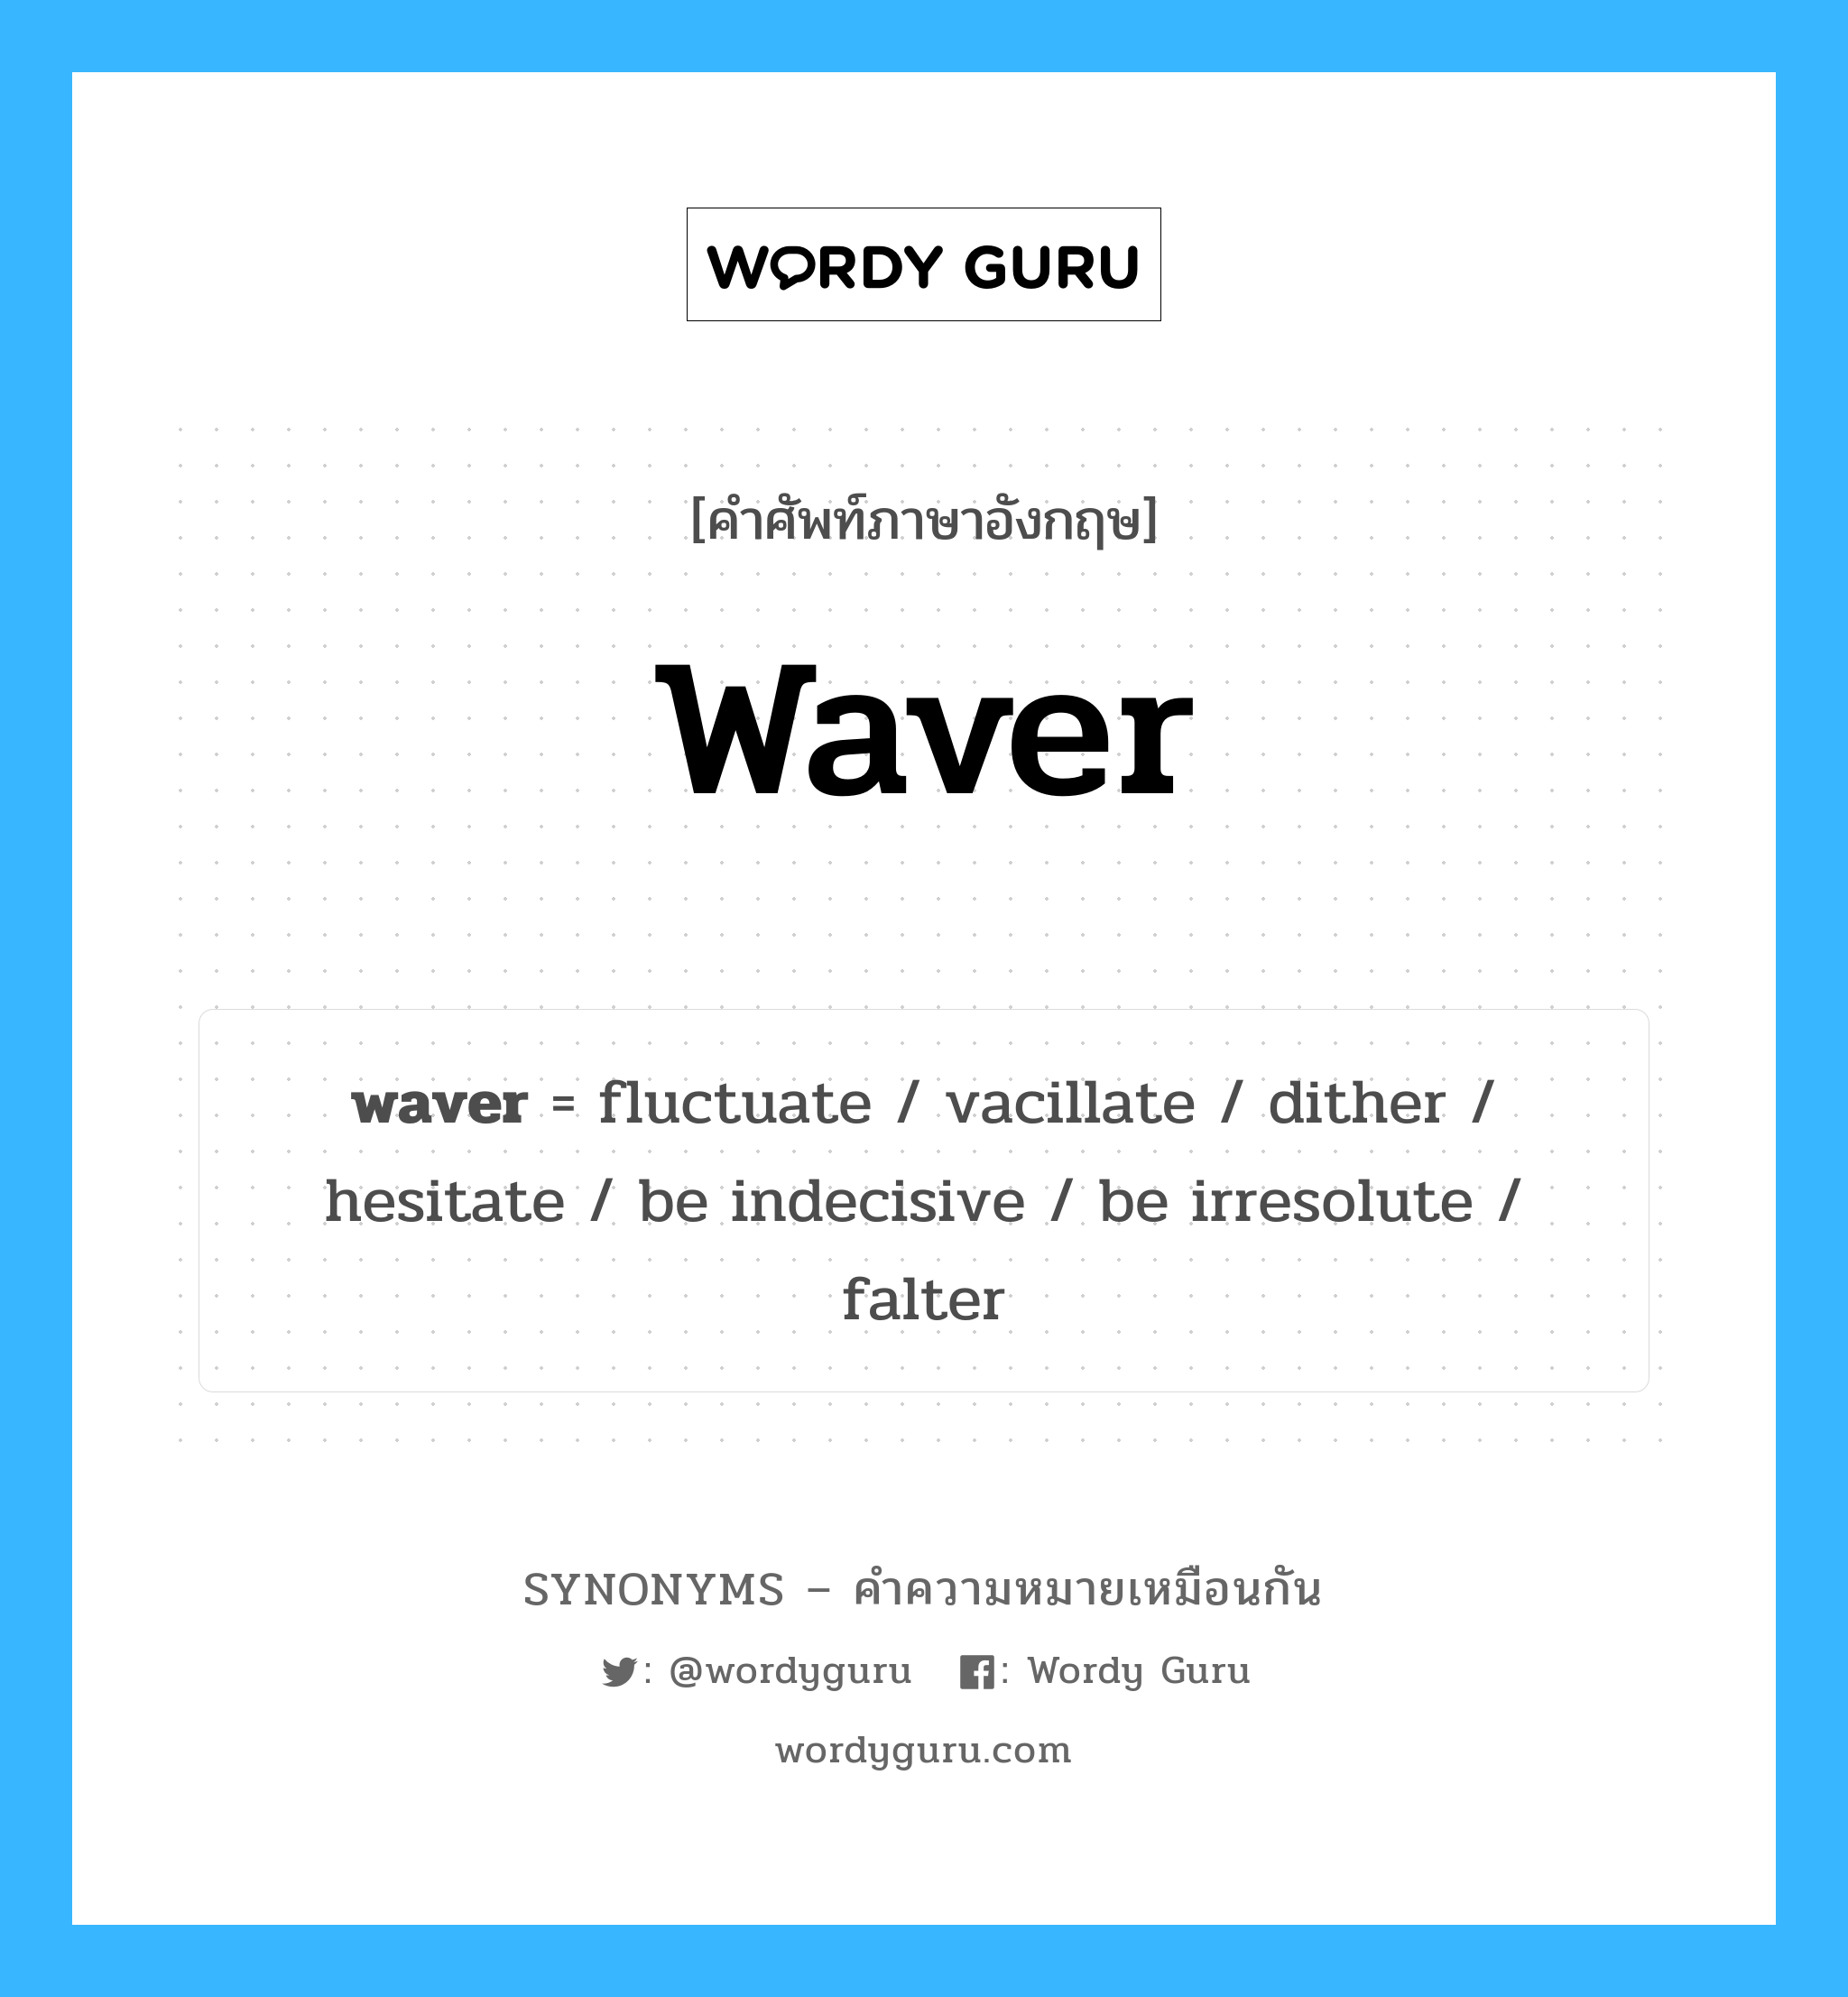 be irresolute เป็นหนึ่งใน waver และมีคำอื่น ๆ อีกดังนี้, คำศัพท์ภาษาอังกฤษ be irresolute ความหมายคล้ายกันกับ waver แปลว่า สามารถ irresolute หมวด waver